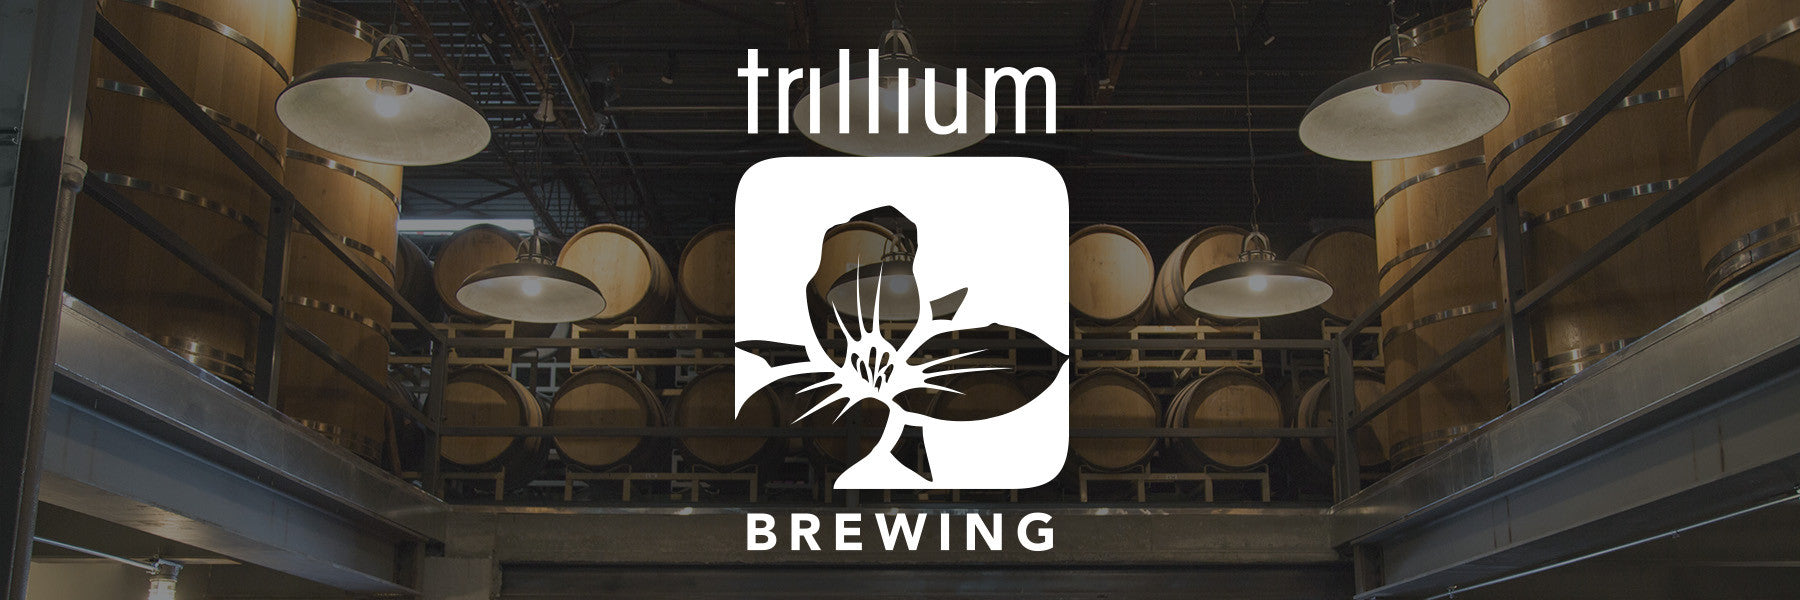 Trillium Brewing | 5 bbl Pilot System